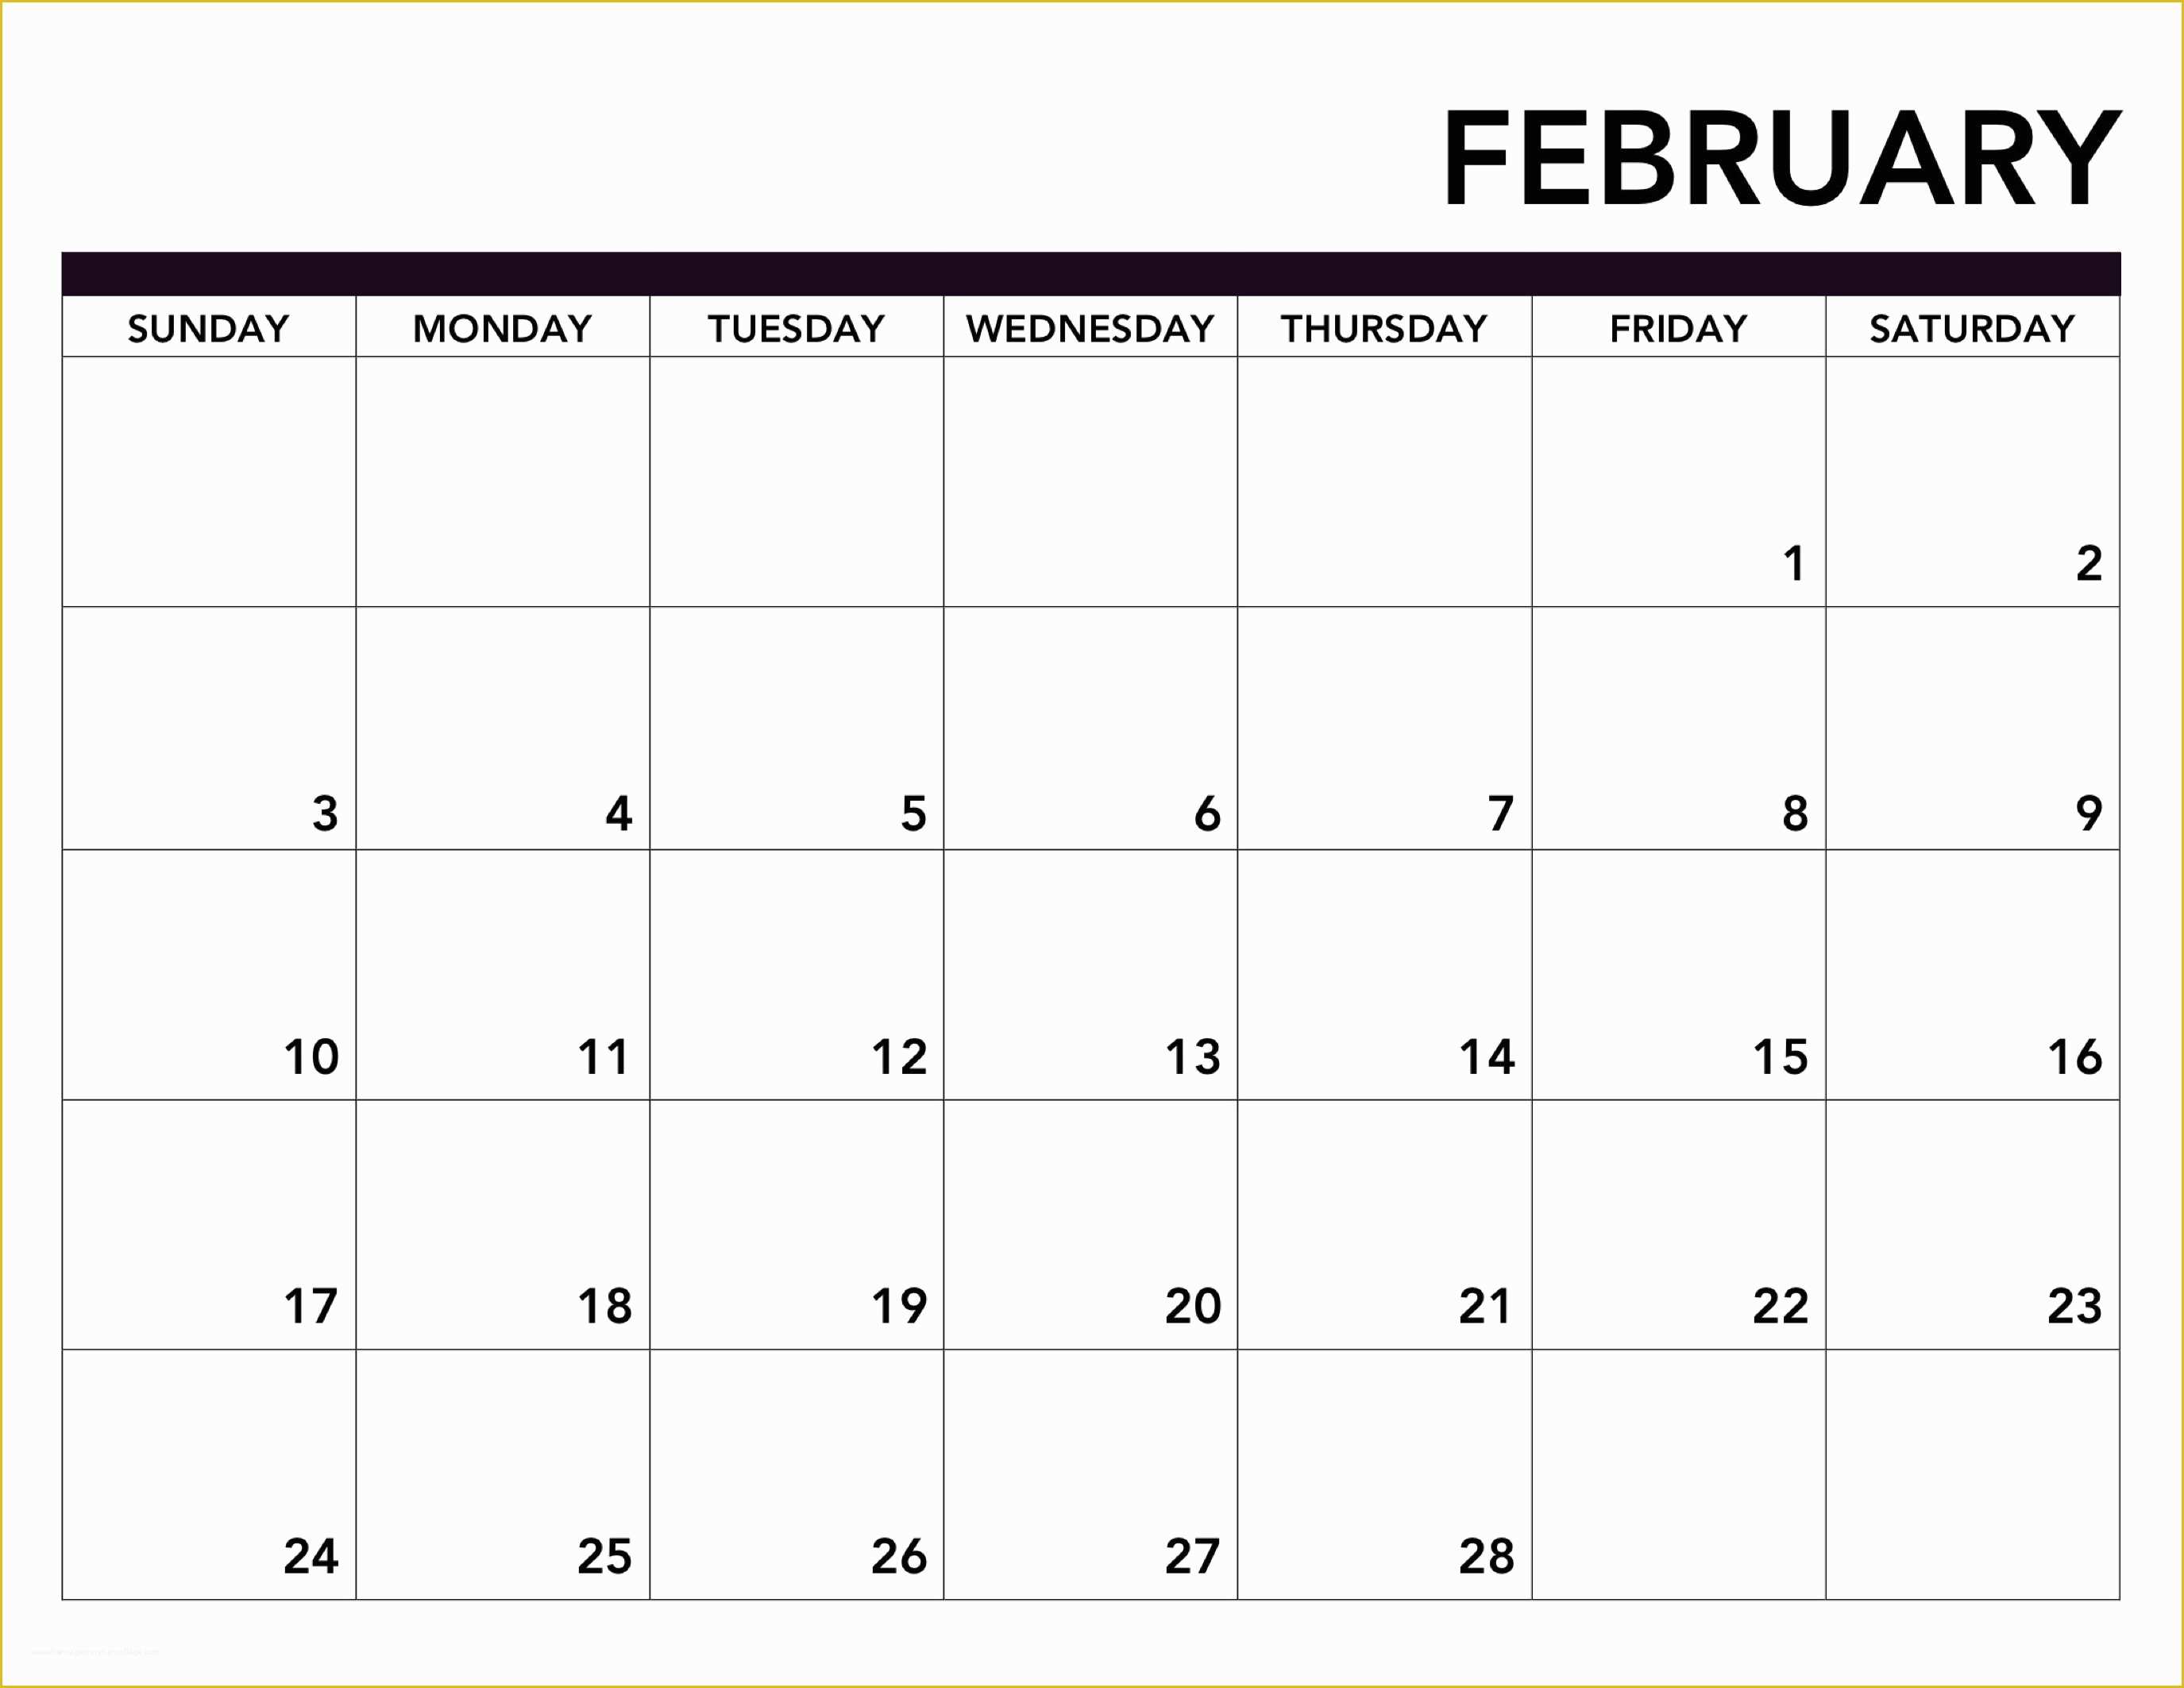 Free Calendar Template 2019 Of 51 Free February 2019 Printable Calendar Templates Pdf